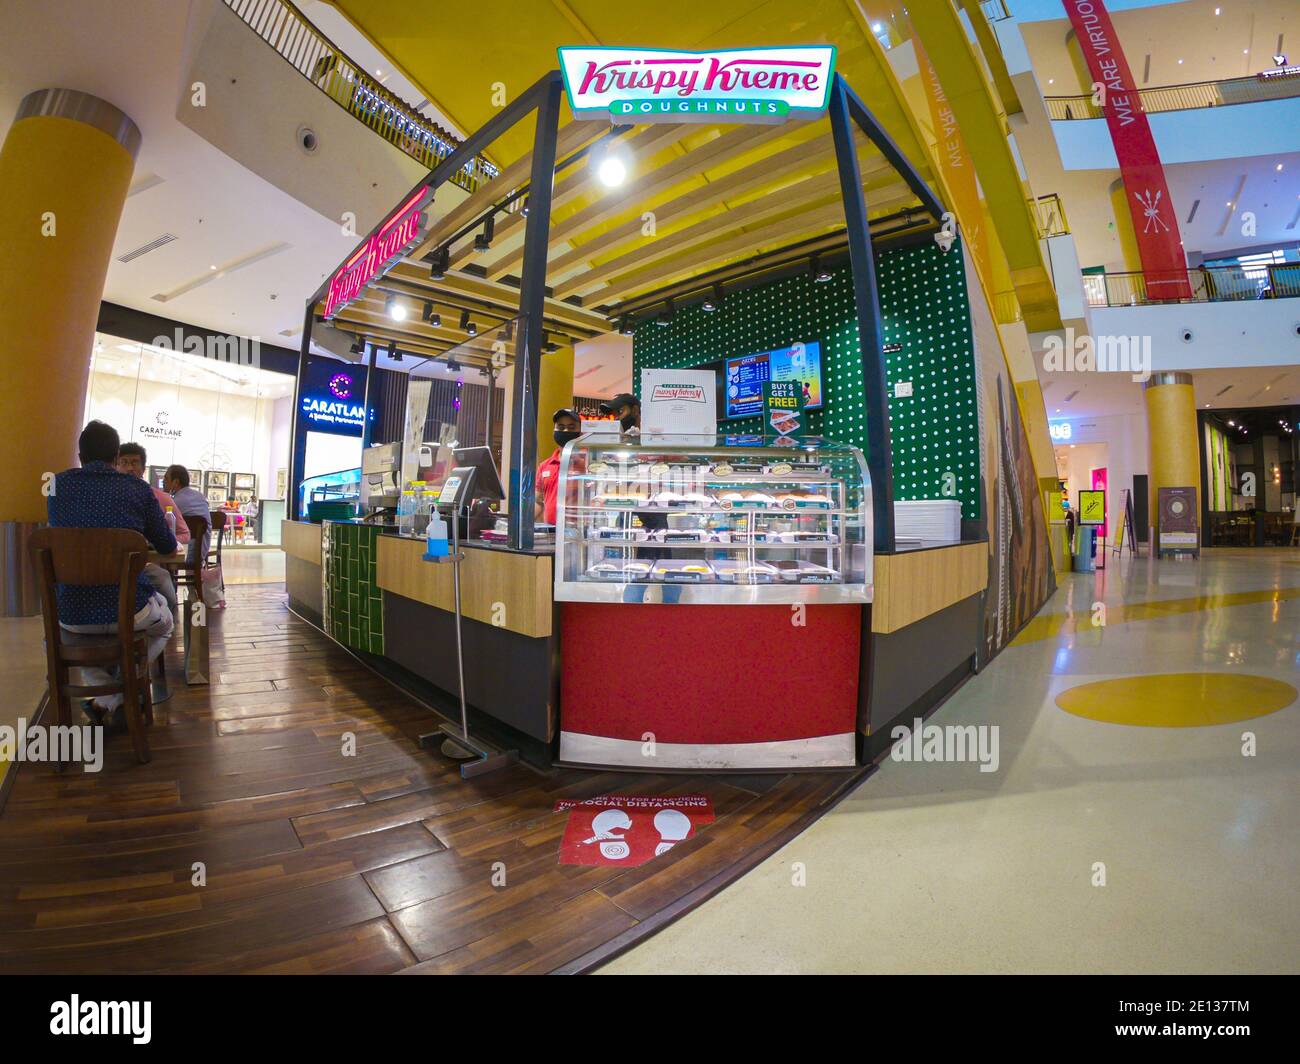 Krispy Kreme Doughnut Shop High Resolution Stock Photography and Images -  Alamy